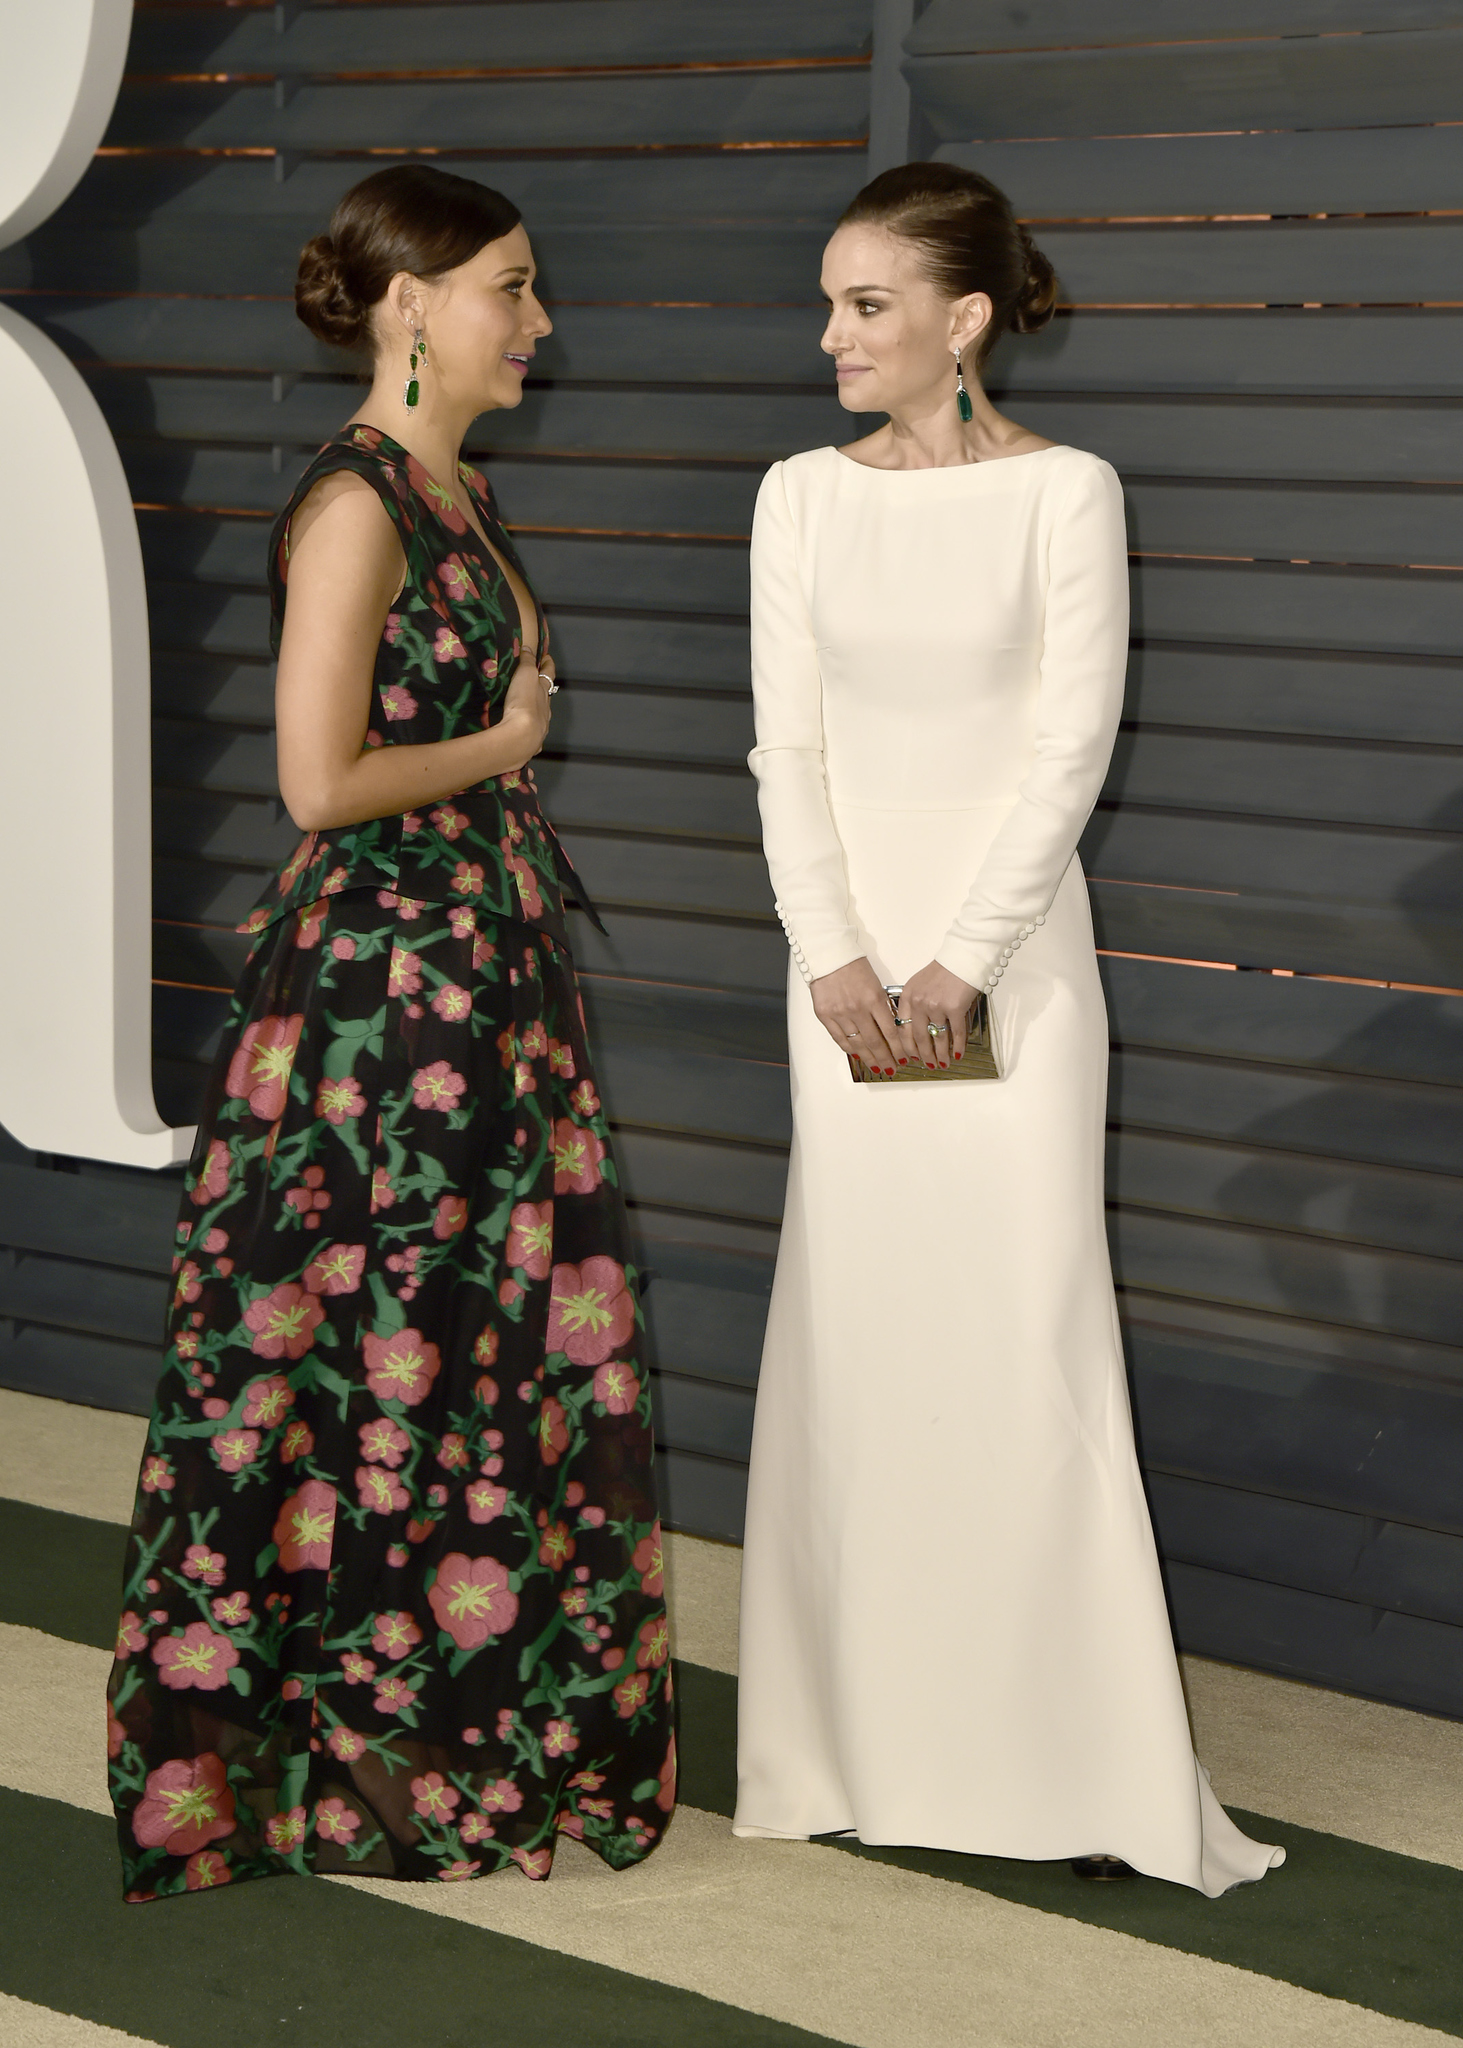 Natalie Portman and Rashida Jones at event of The Oscars (2015)